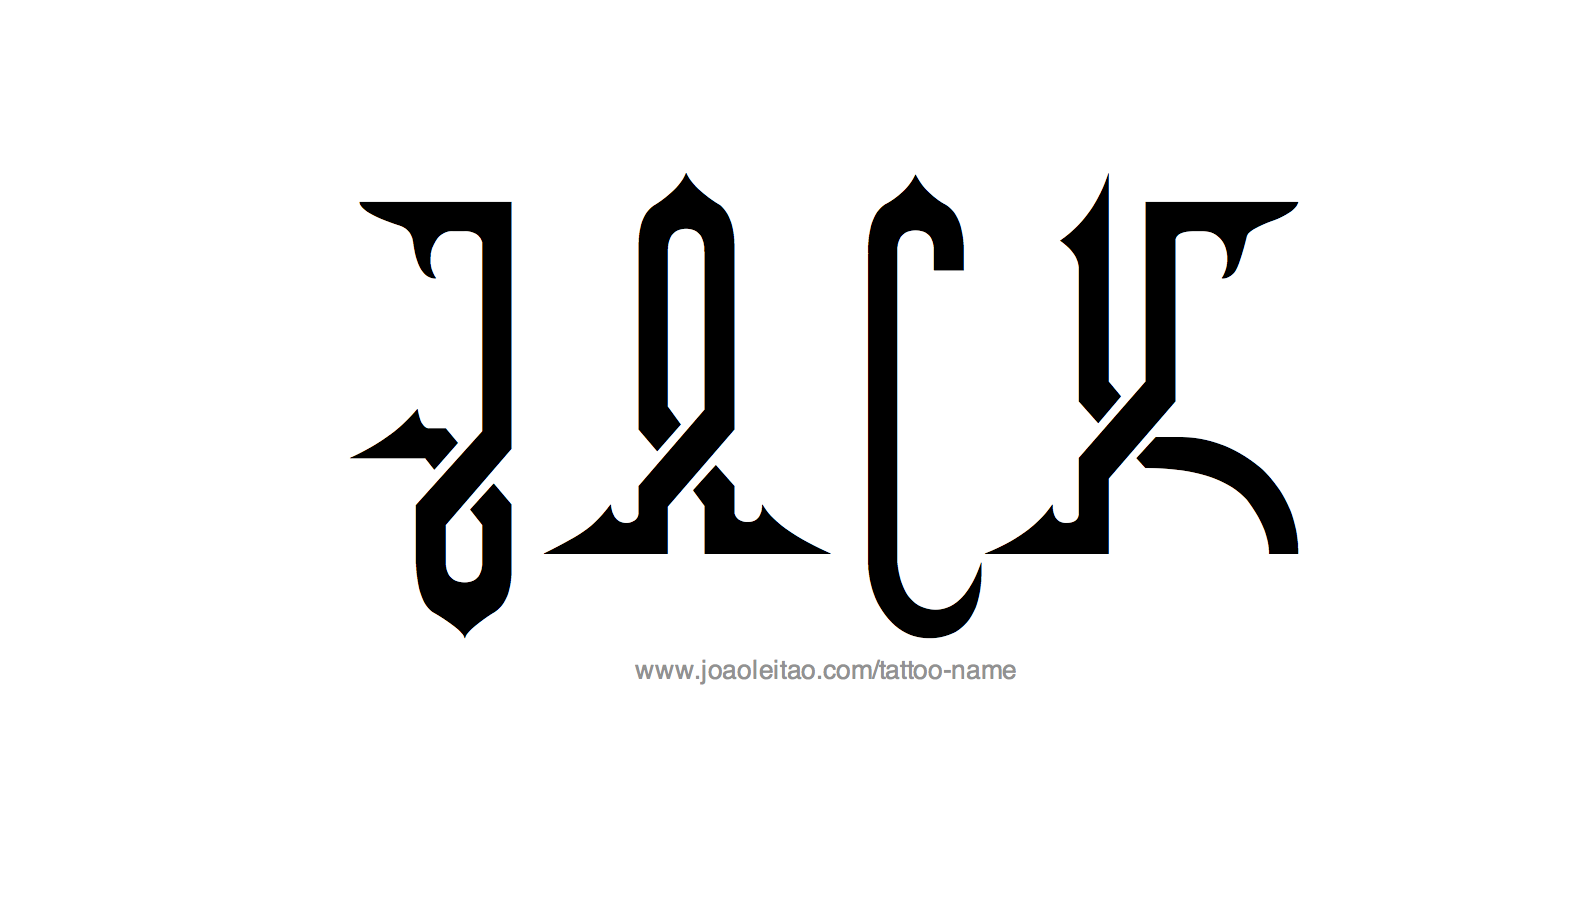 Tattoo Design Name Jack